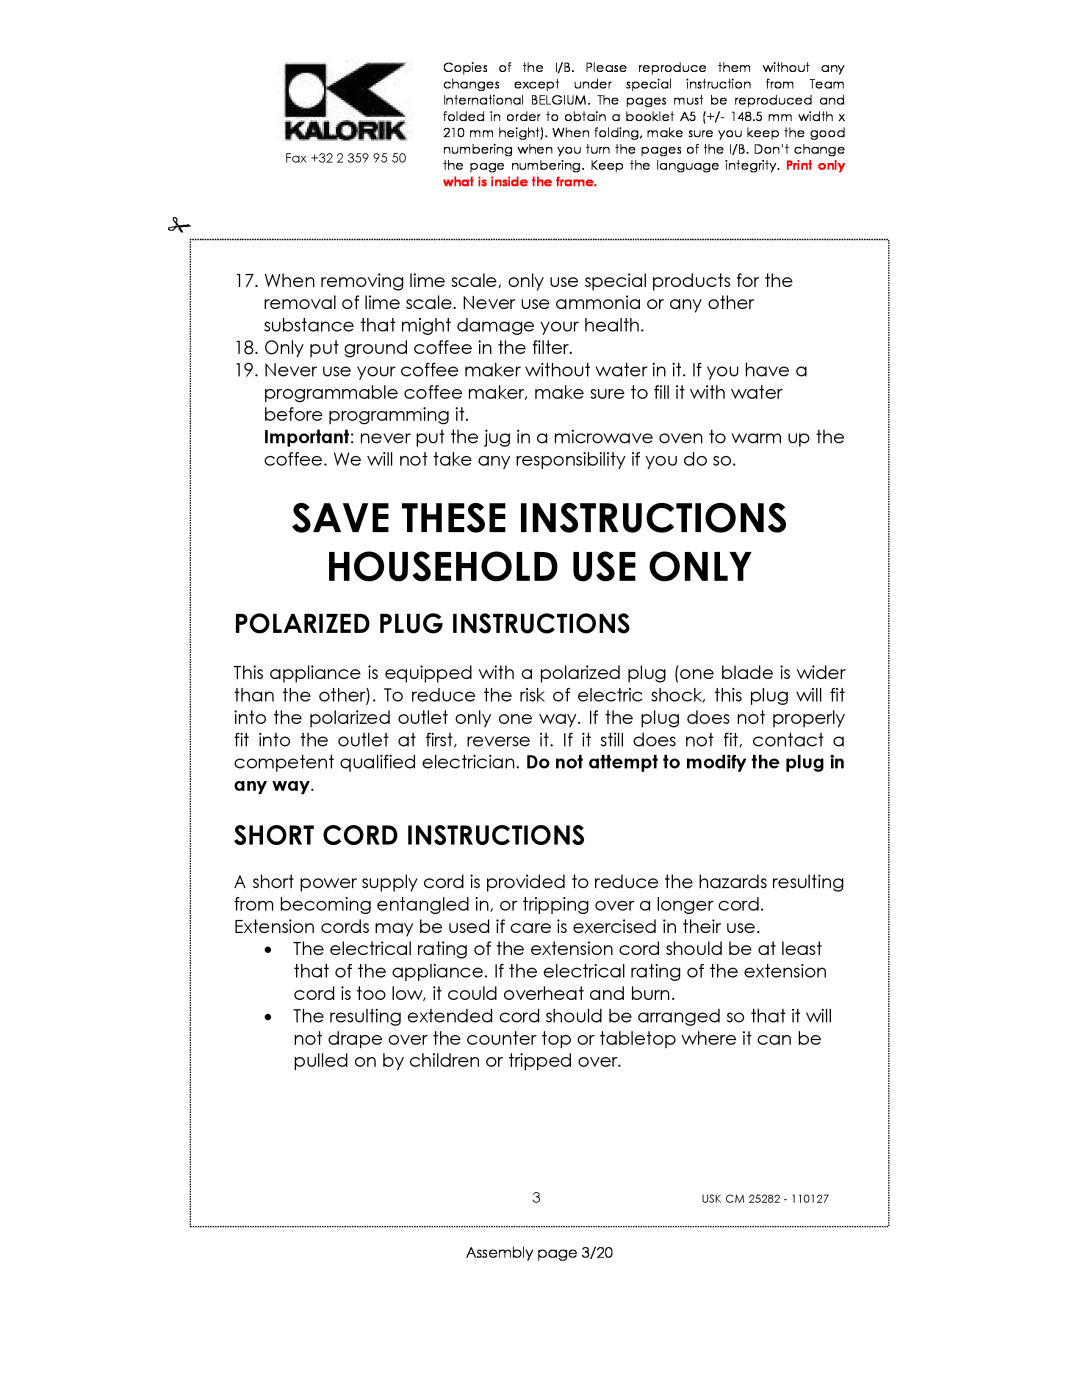 Kalorik USK CM 25282 Save These Instructions Household Use Only, Polarized Plug Instructions, Short Cord Instructions 